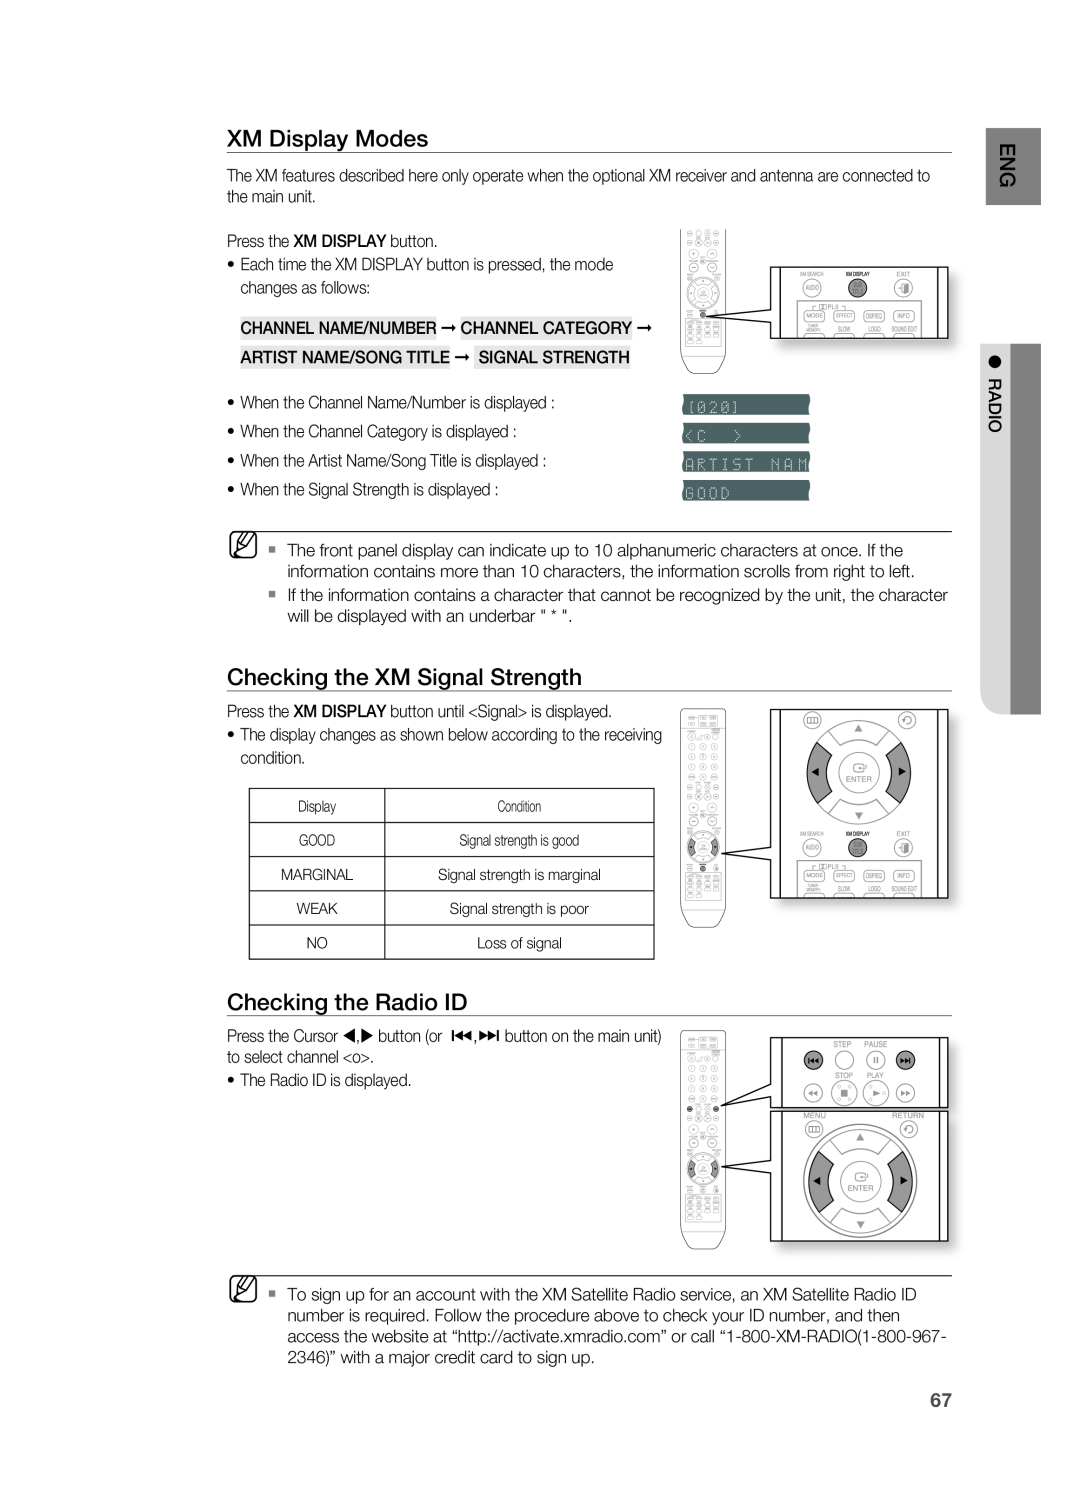 Samsung HT-TZ515 user manual XM Display Modes, Checking the XM Signal Strength, Checking the radio ID 